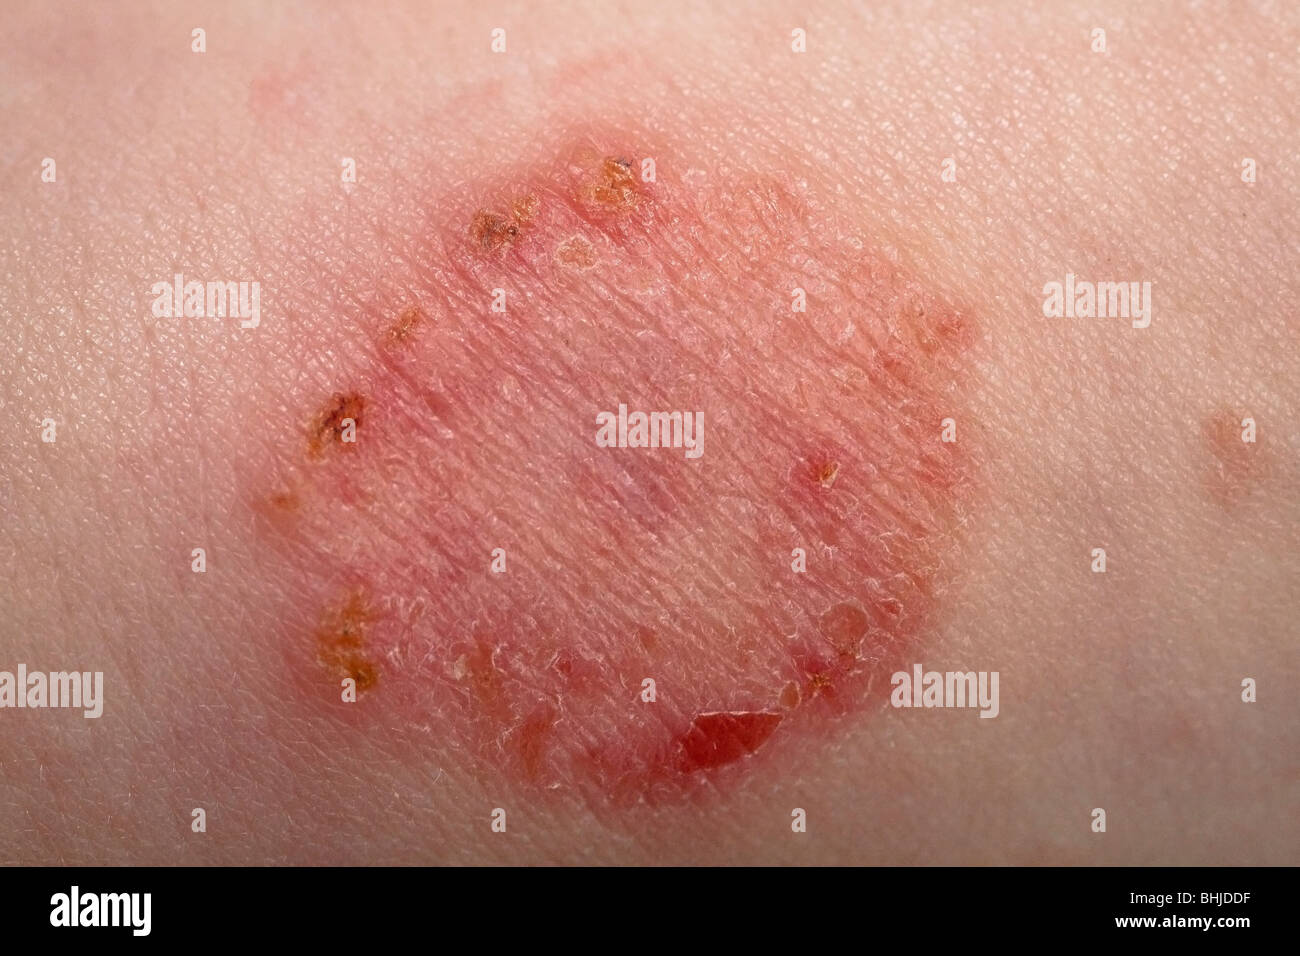 Ringworm fungus infection tinea corporis on young boy's arm Stock Photo